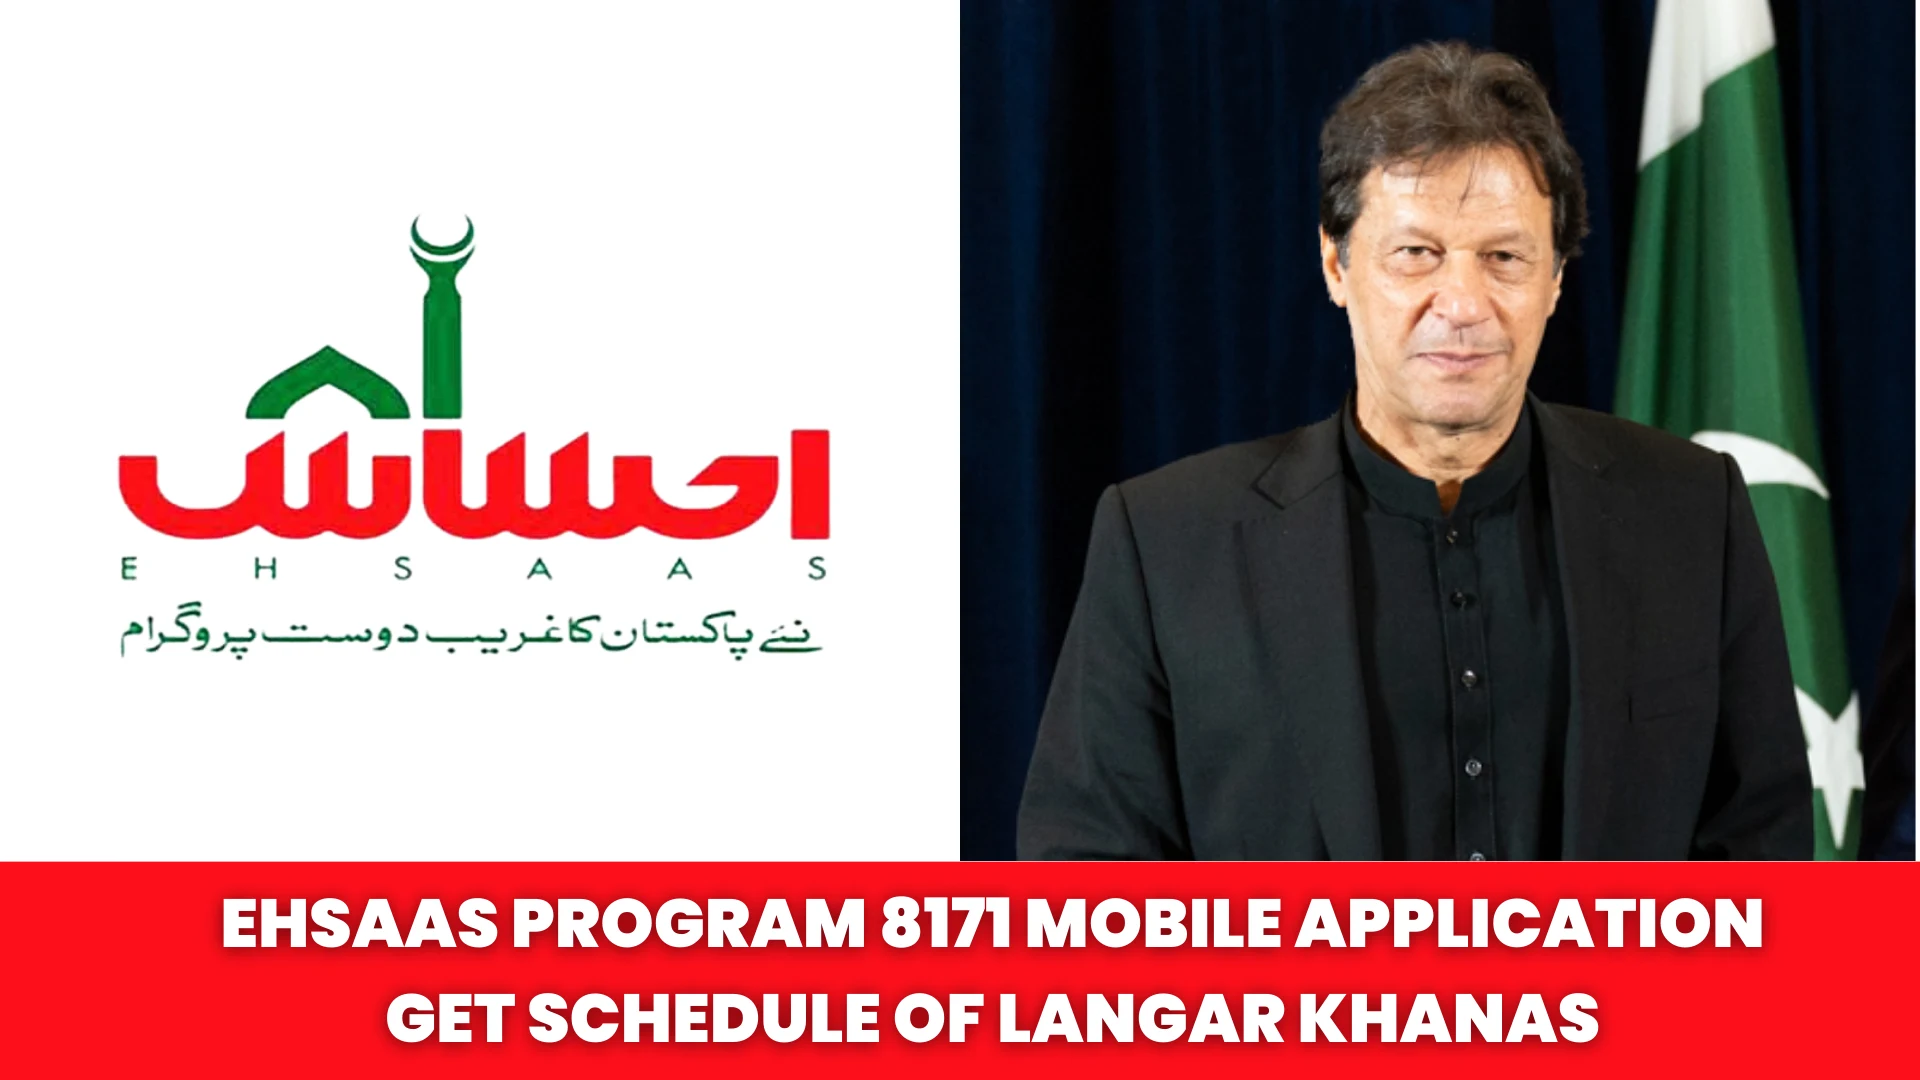 Ehsaas Program 8171 Mobile Application Get Schedule of Langar Khanas